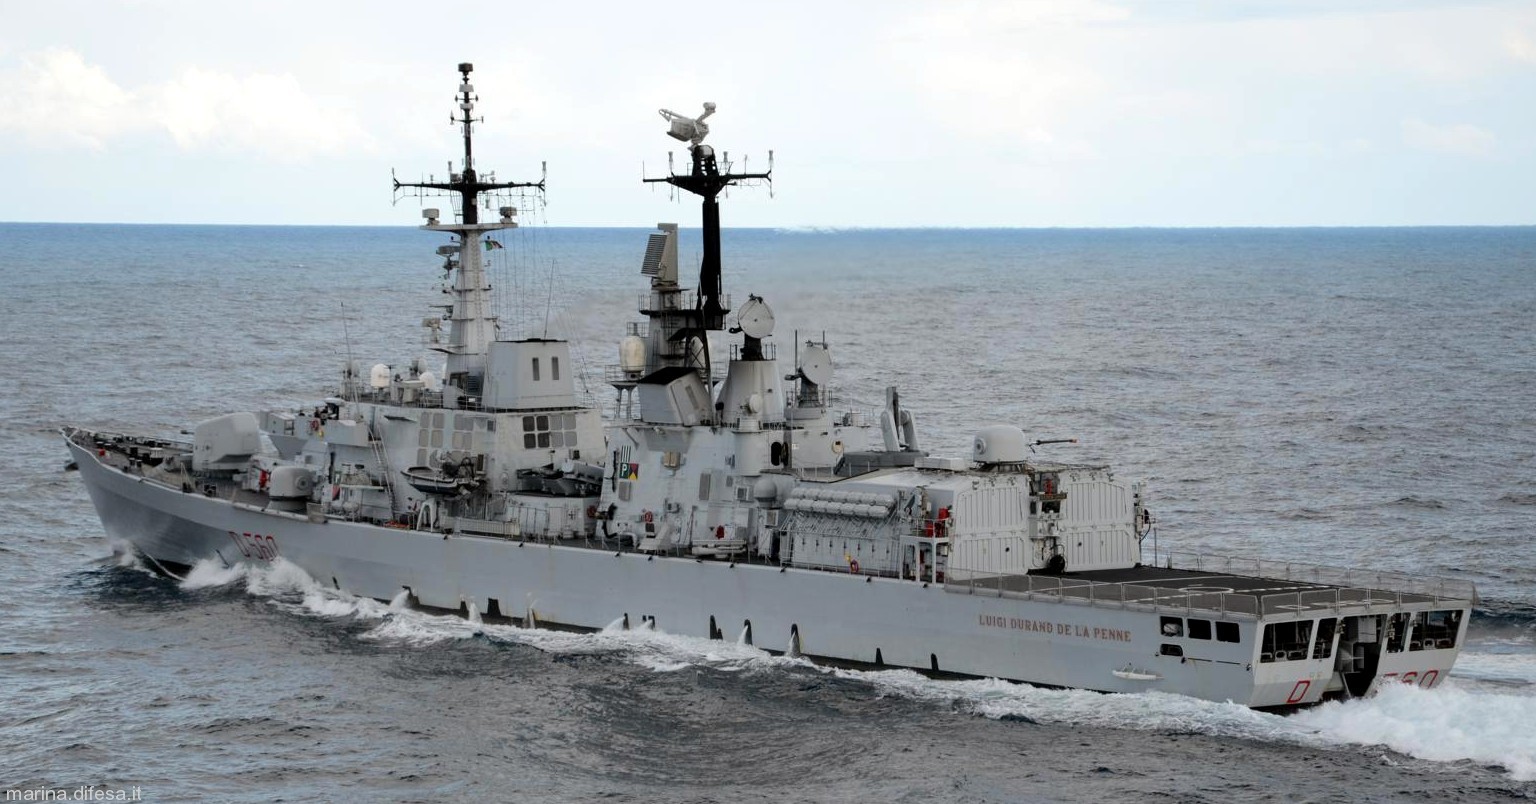 d-560 luigi durand de la penne its nave guided missile destroyer ddg italian navy marina militare 75